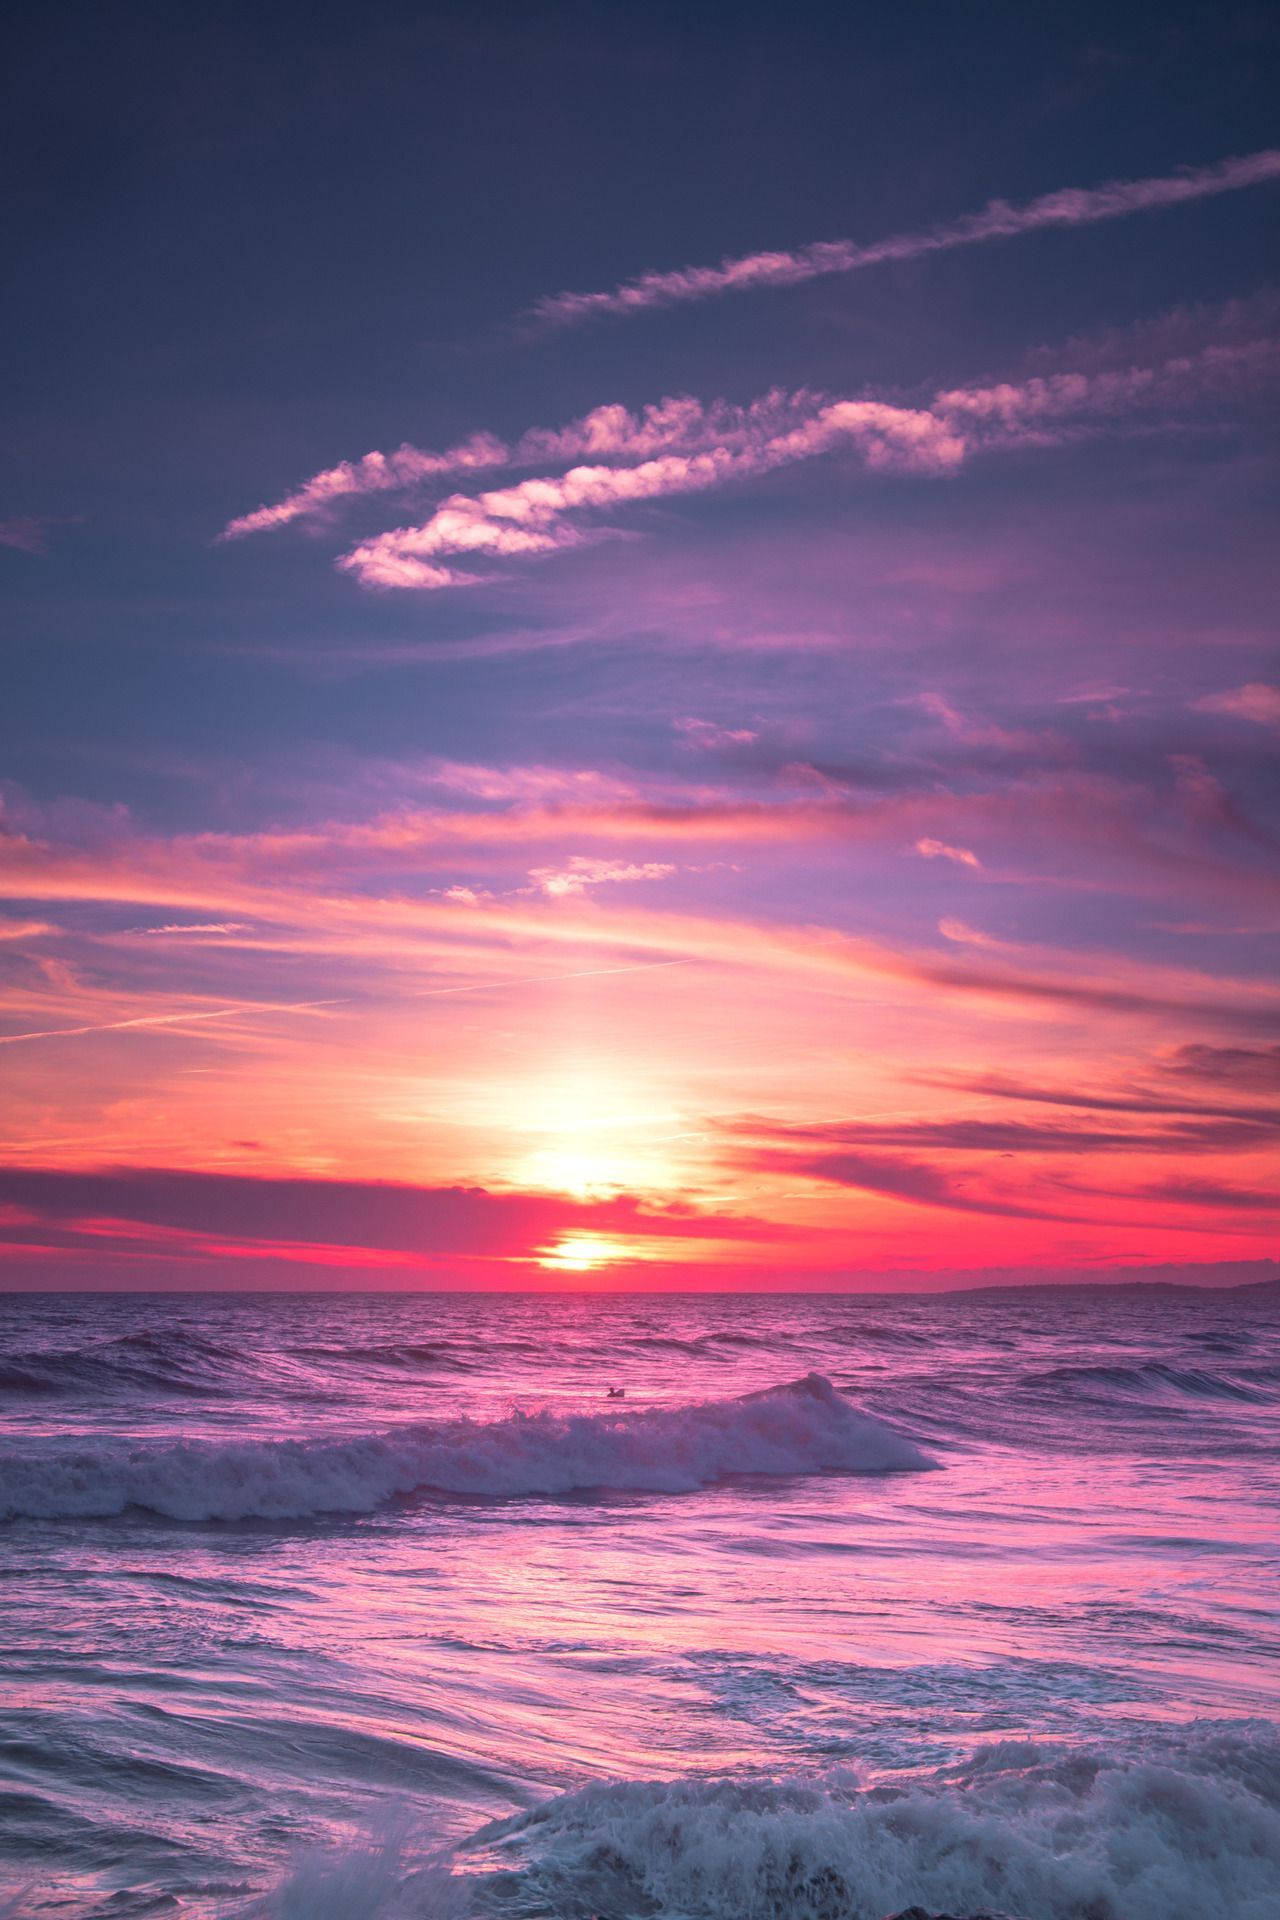 Purple Aesthetic Sunset Sky Over Ocean Waves Background